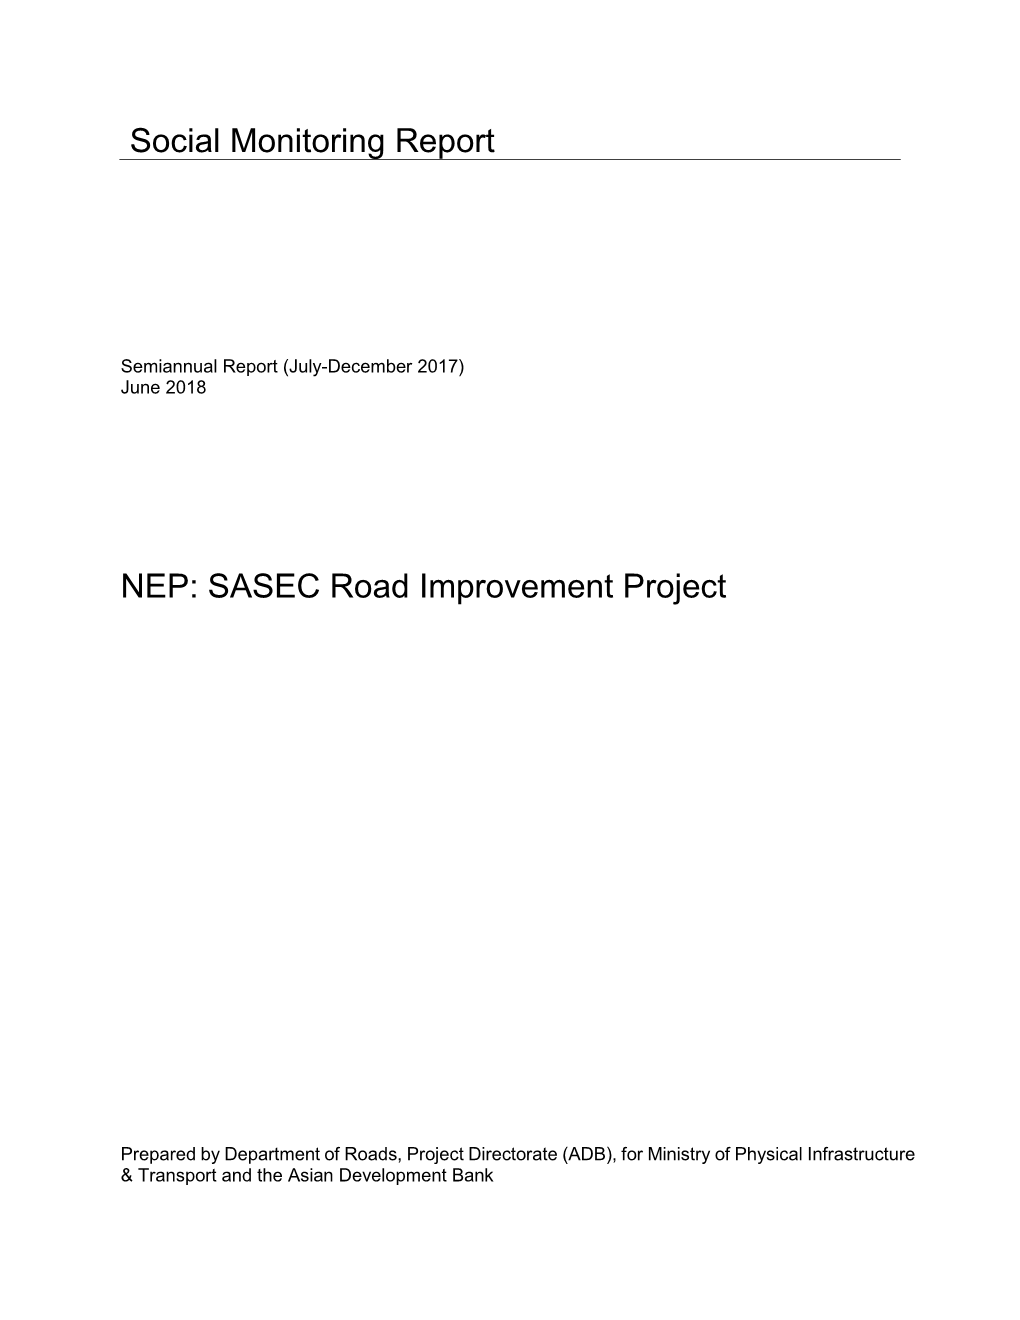 Social Monitoring Report NEP: SASEC Road Improvement Project